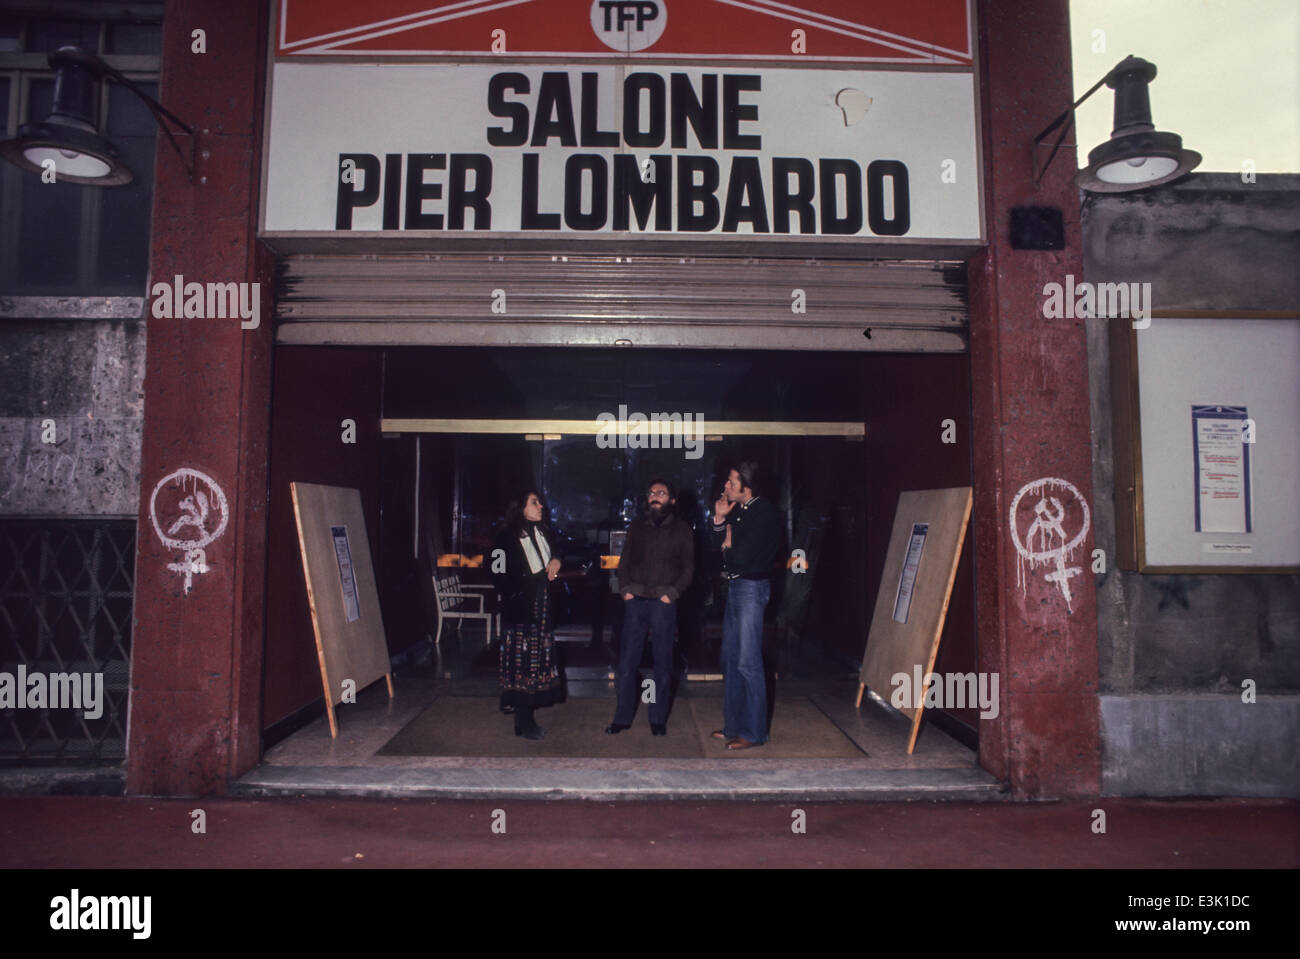 salone pier lombardo,milan,italy,70's‚ Stock Photo